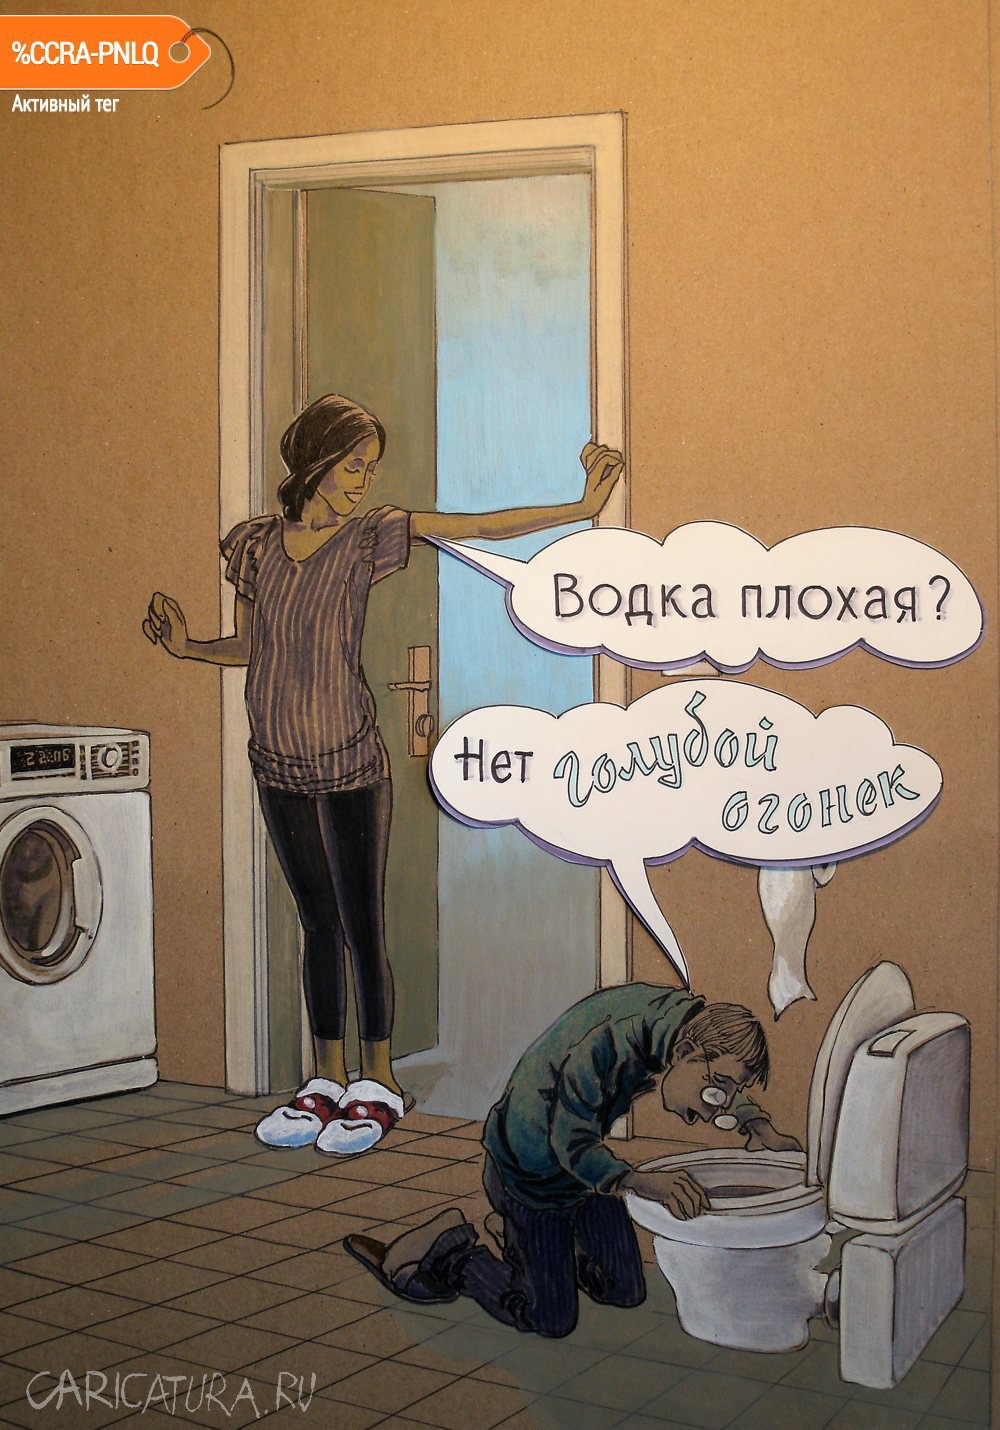 Карикатура "Новогодняя ночь", Алексей Шишкарёв